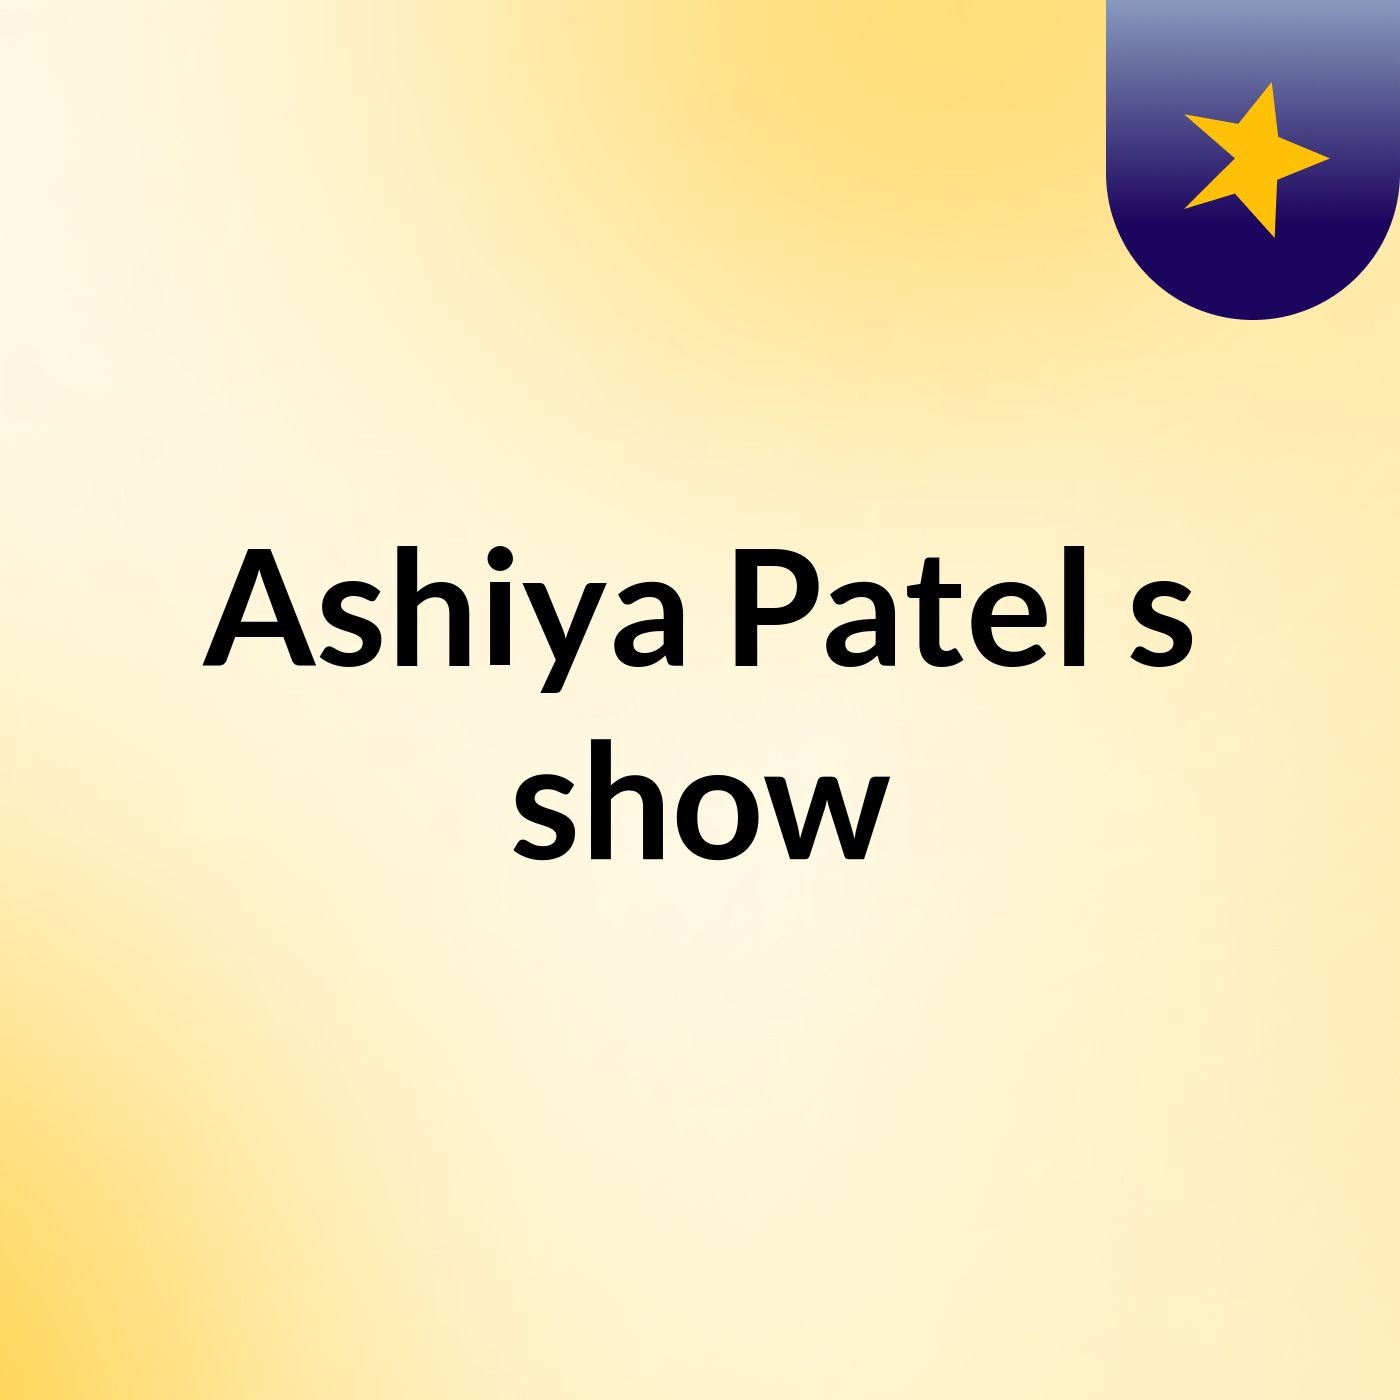 Ashiya Patel's show